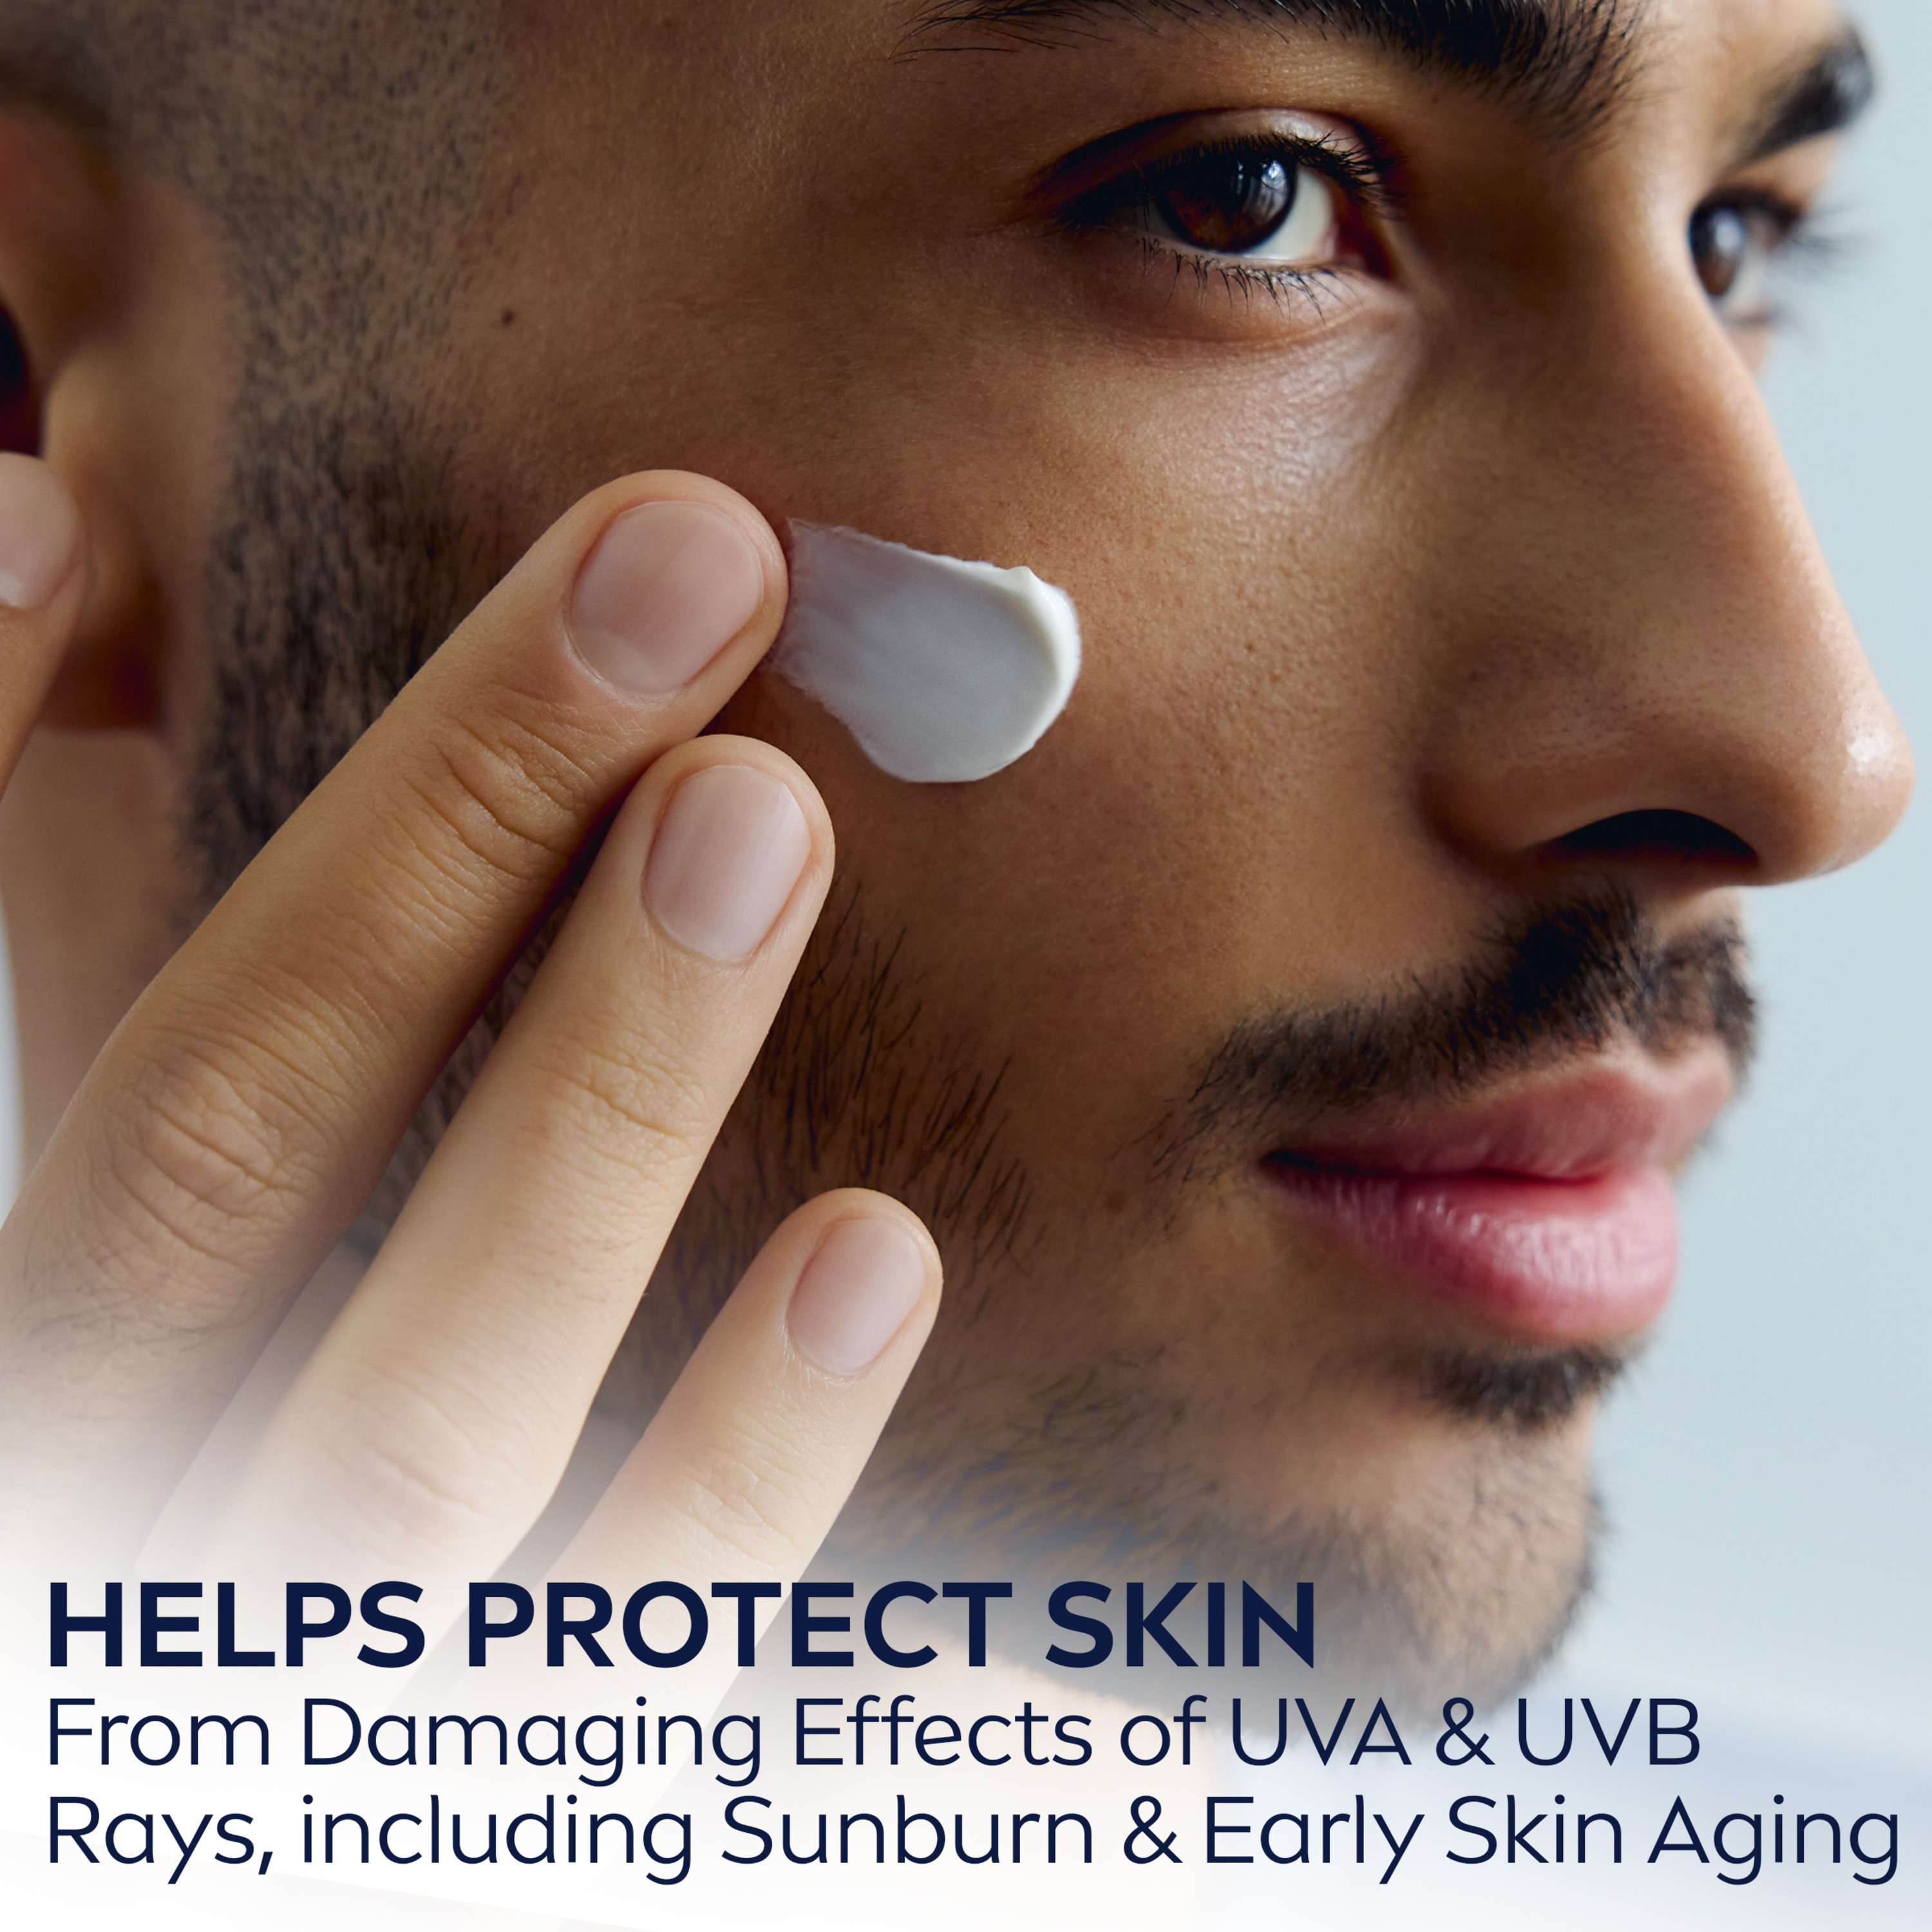 NIVEA MEN Sensitive Face Lotion with Broad Spectrum Sunscreen, SPF 15, 2.5 fl oz Tube - image 4 of 8